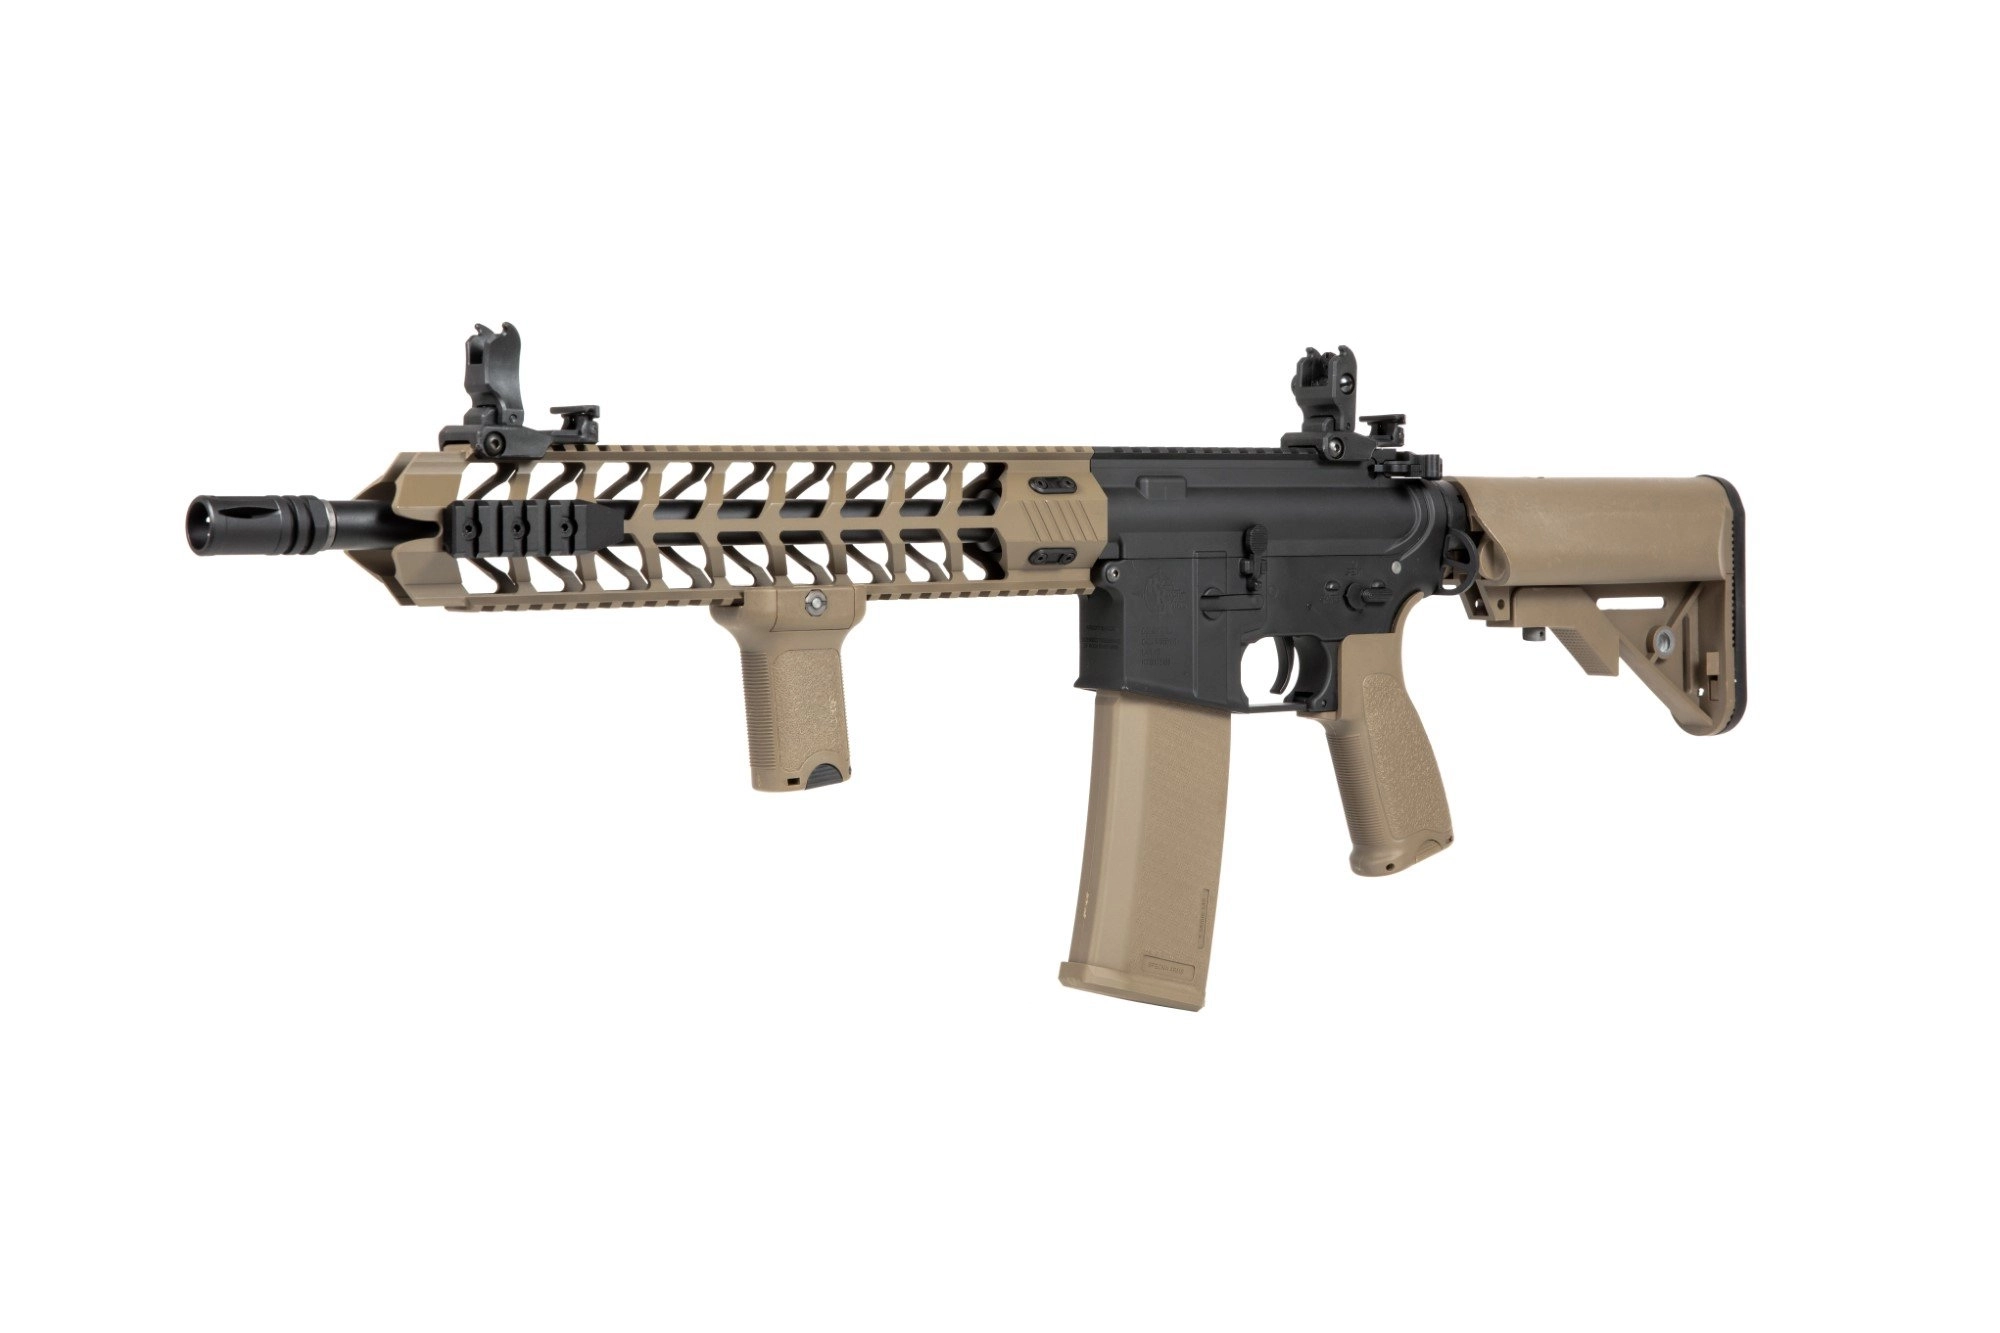 Specna Arms RRA SA-E13 EDGE sähköase - musta/hiekka